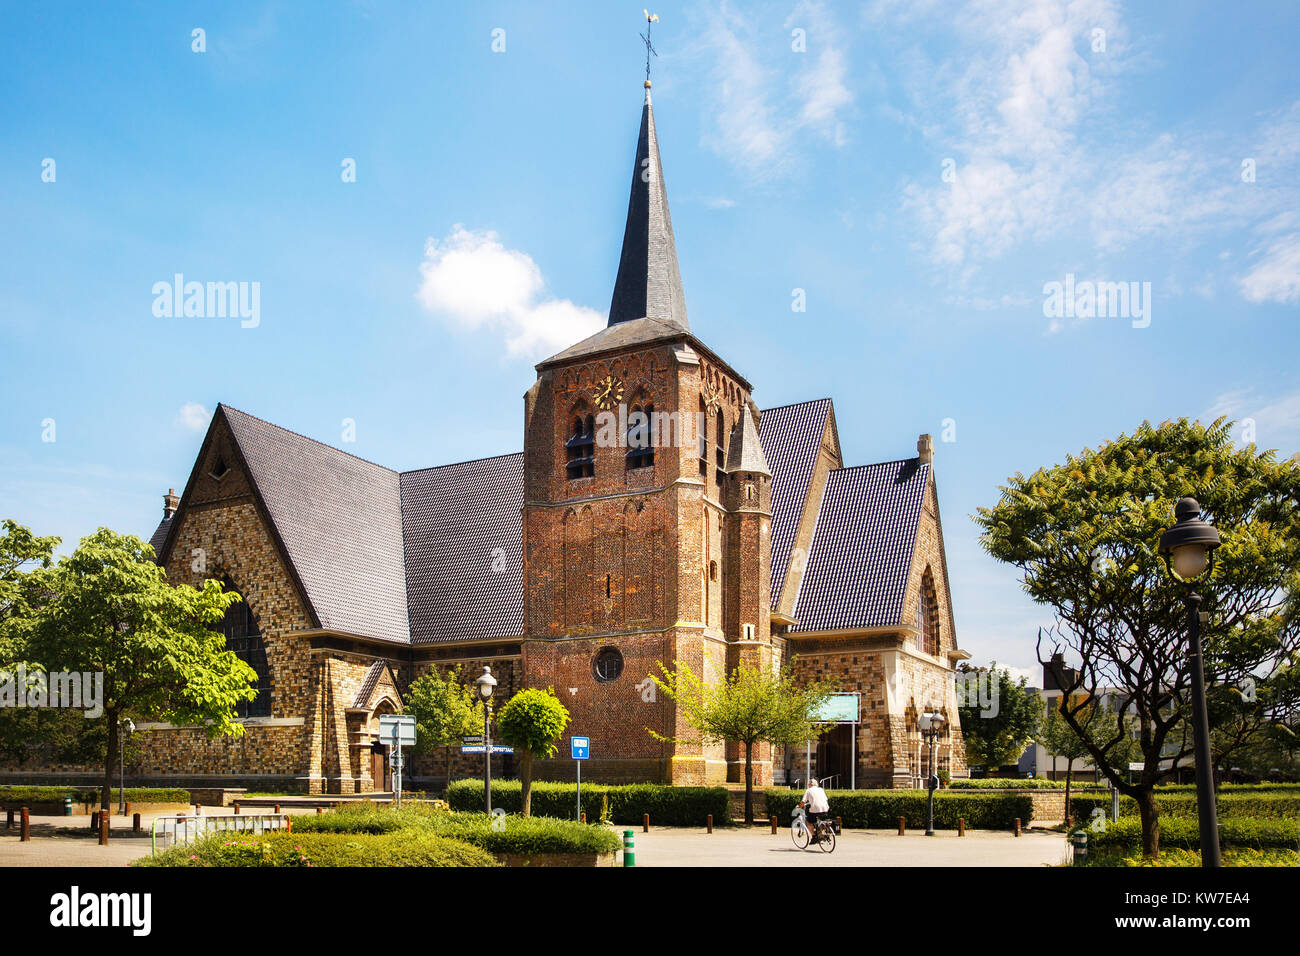 Catholic Church Sint-Martinuskerk in Houthalen-Helchteren, Belgium. Man on a bicycle. Stock Photo